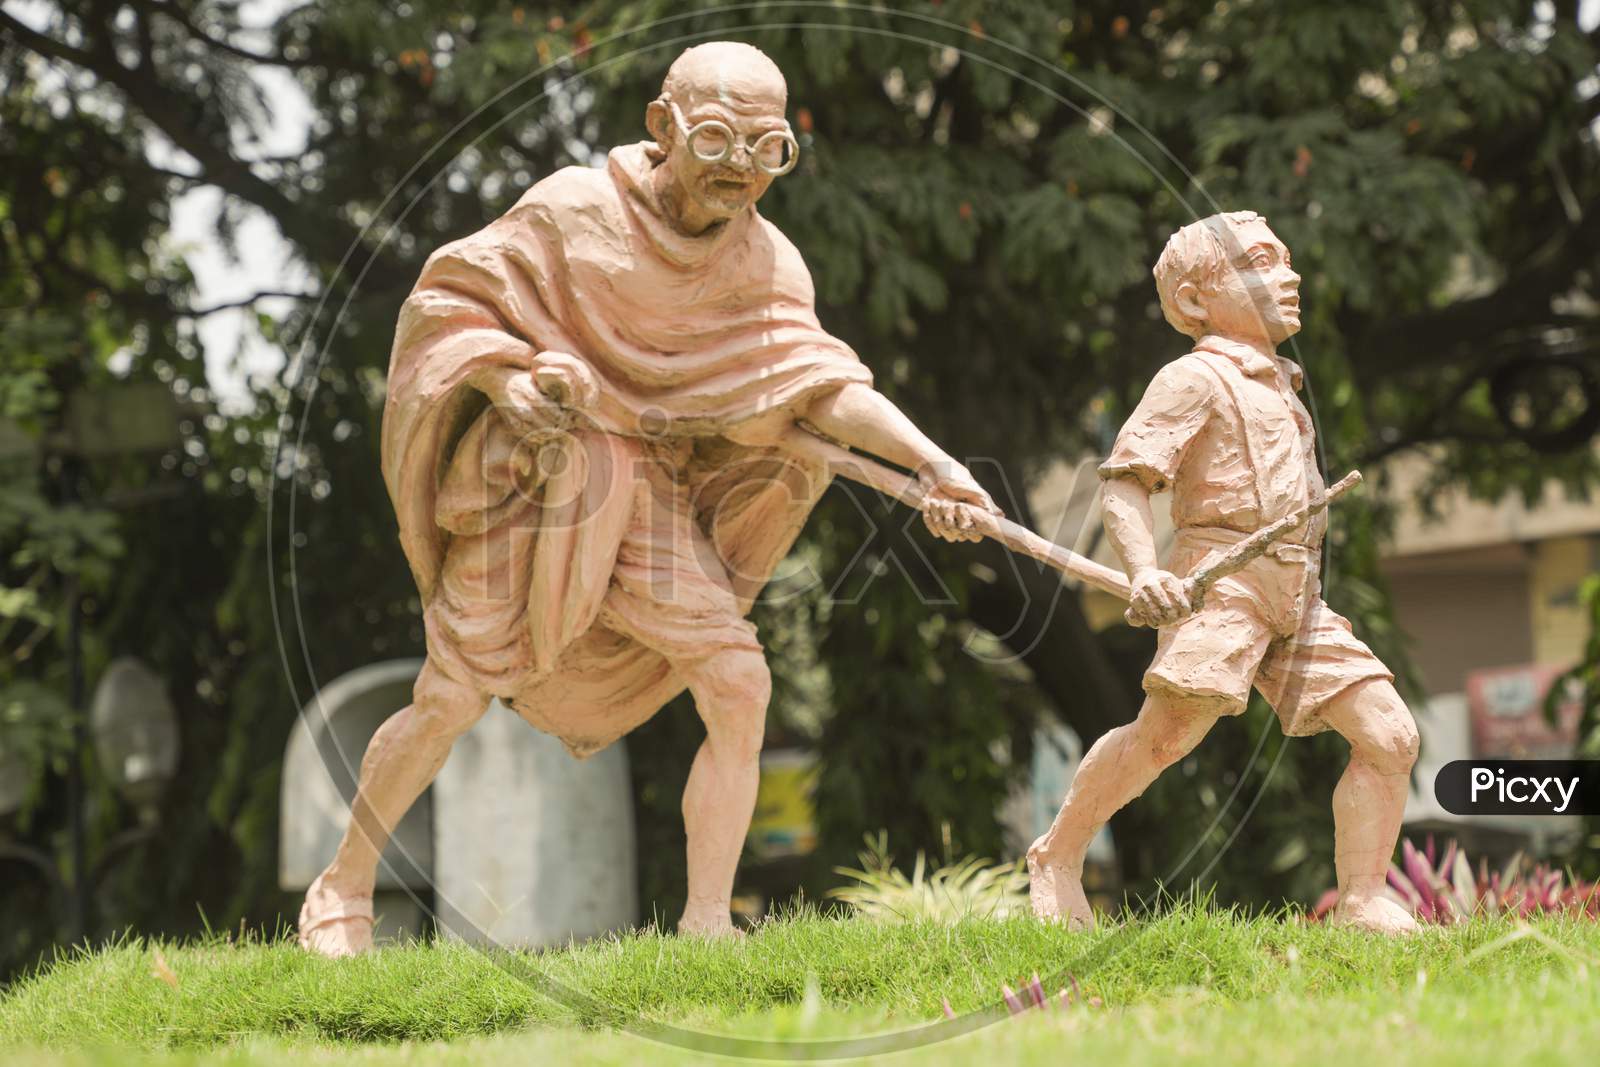 Sculpture Of Mahatma Gandhi And Child, Child Moving By Holding The Stick Of Mahatma Gandi At Bengaluru, India.